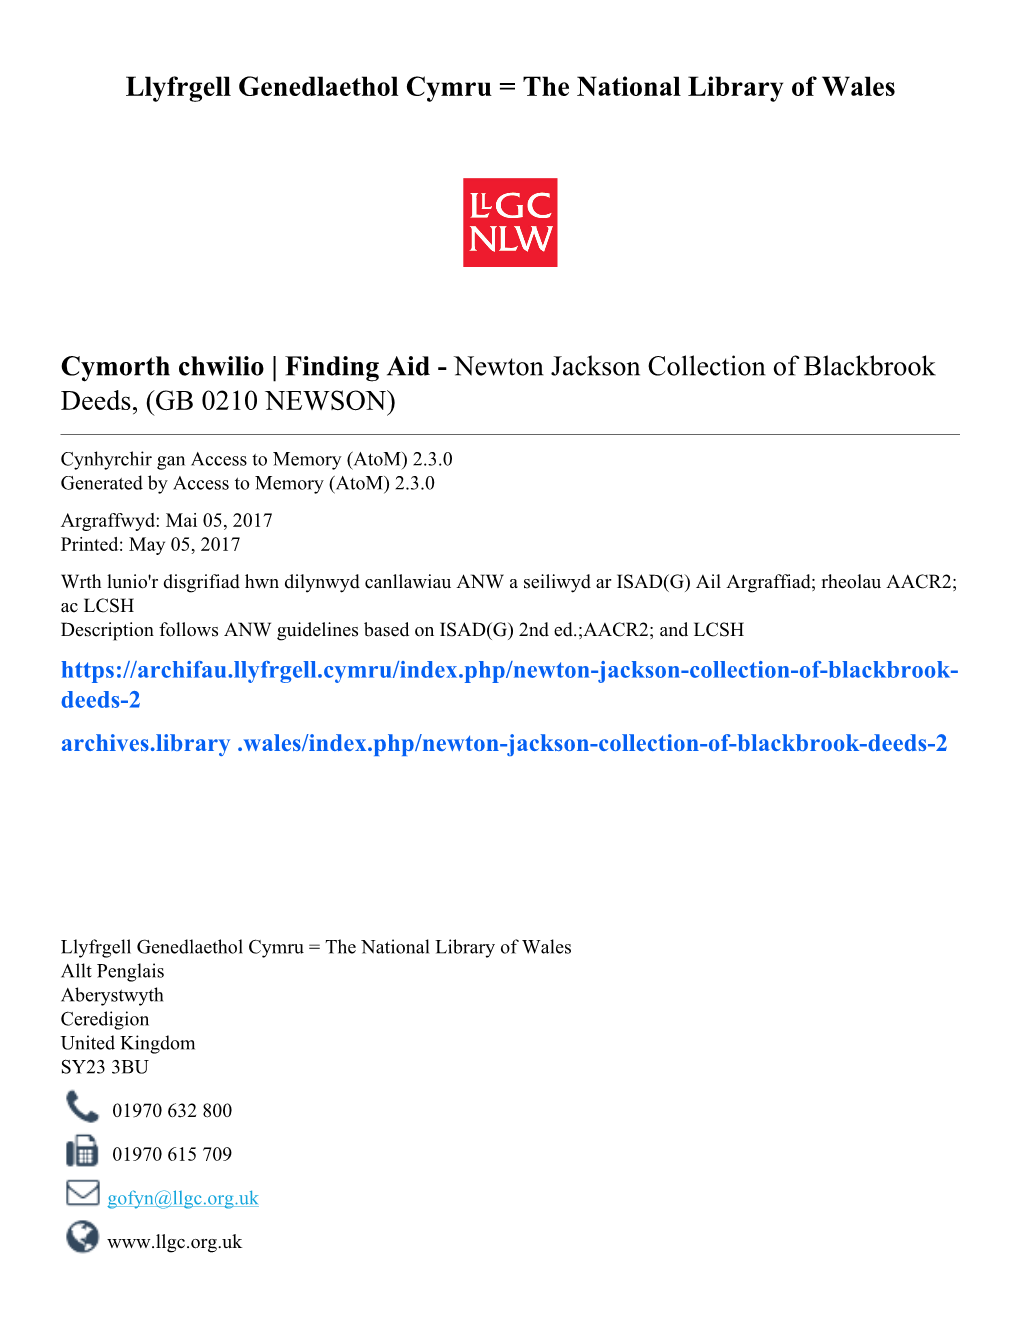 Finding Aid - Newton Jackson Collection of Blackbrook Deeds, (GB 0210 NEWSON)